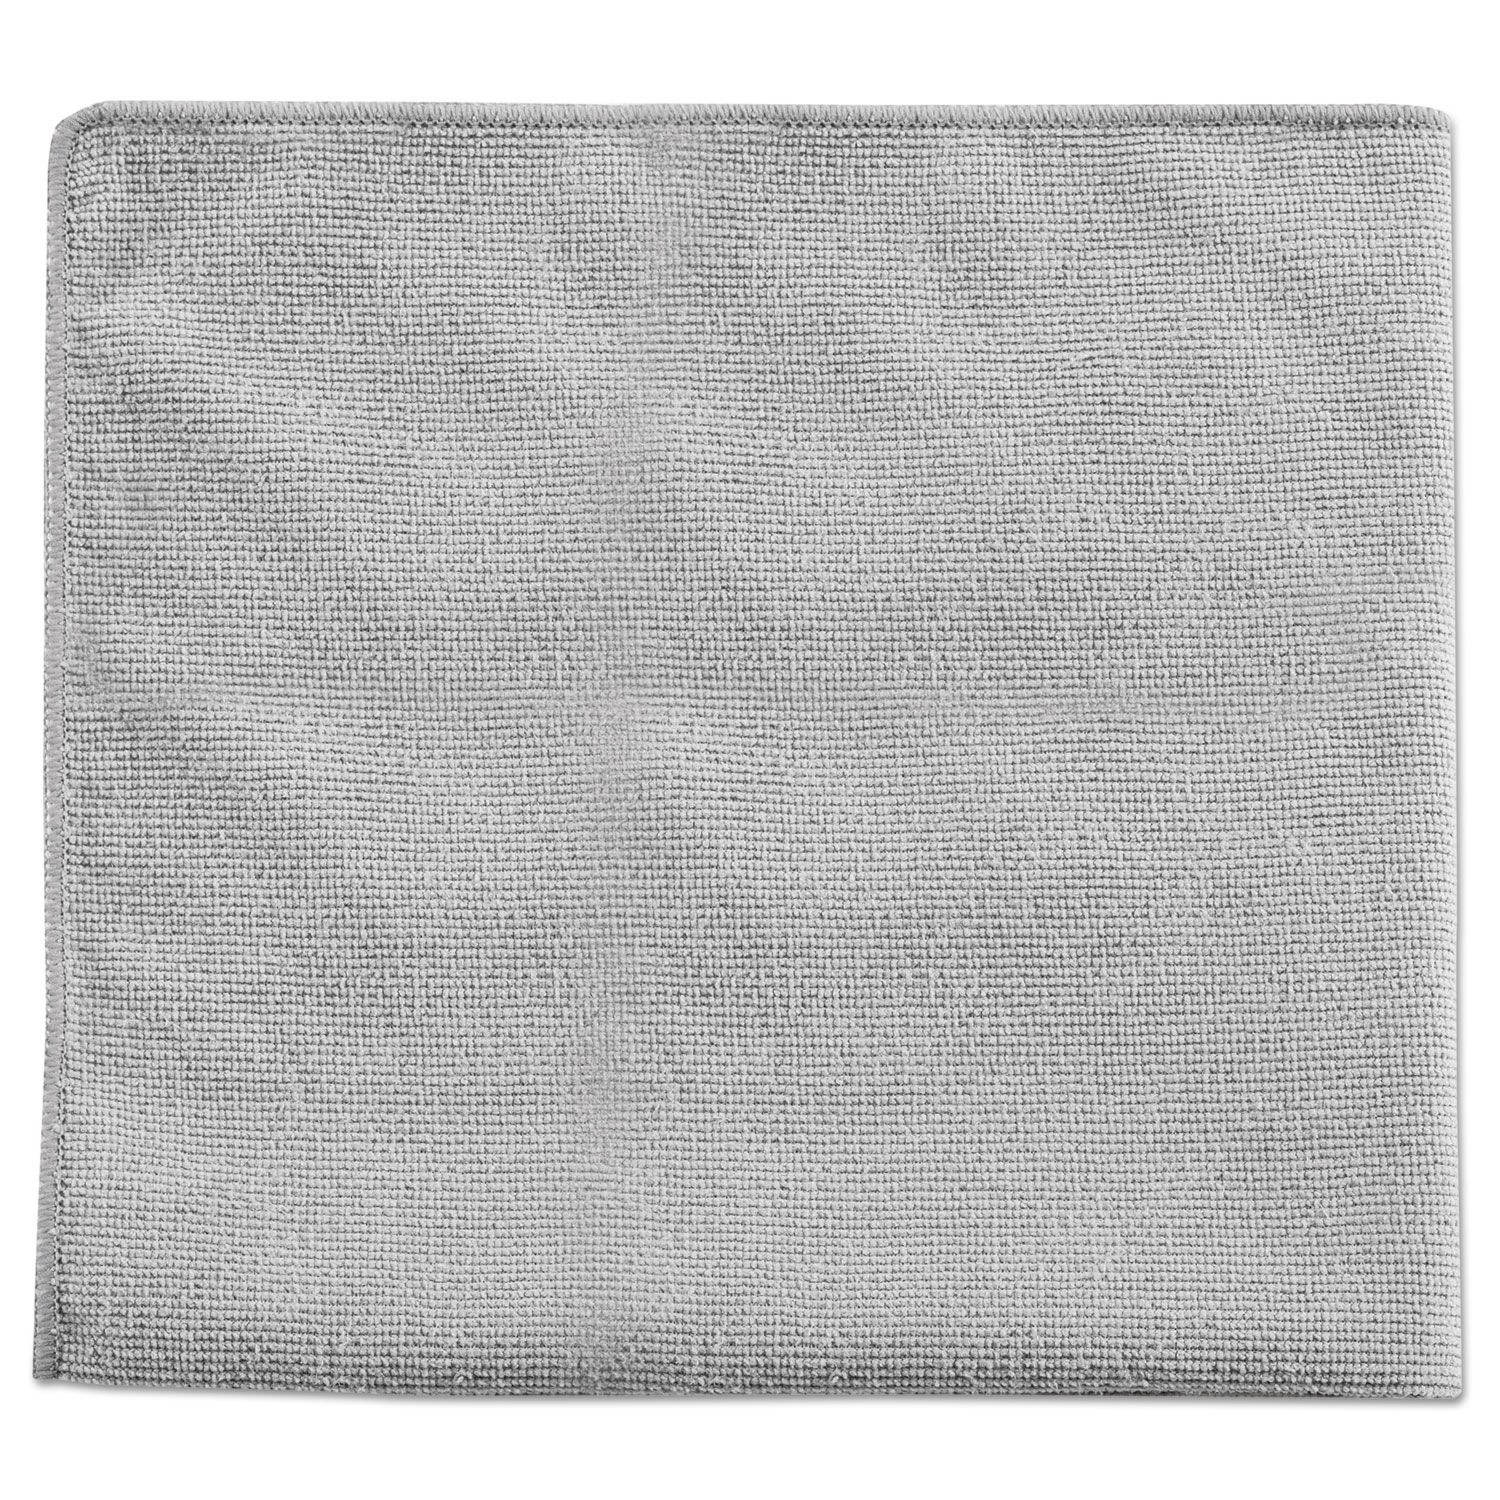 Executive Multi-Purpose Microfiber Cloths, Gray, 16 x 16, 24/Pack